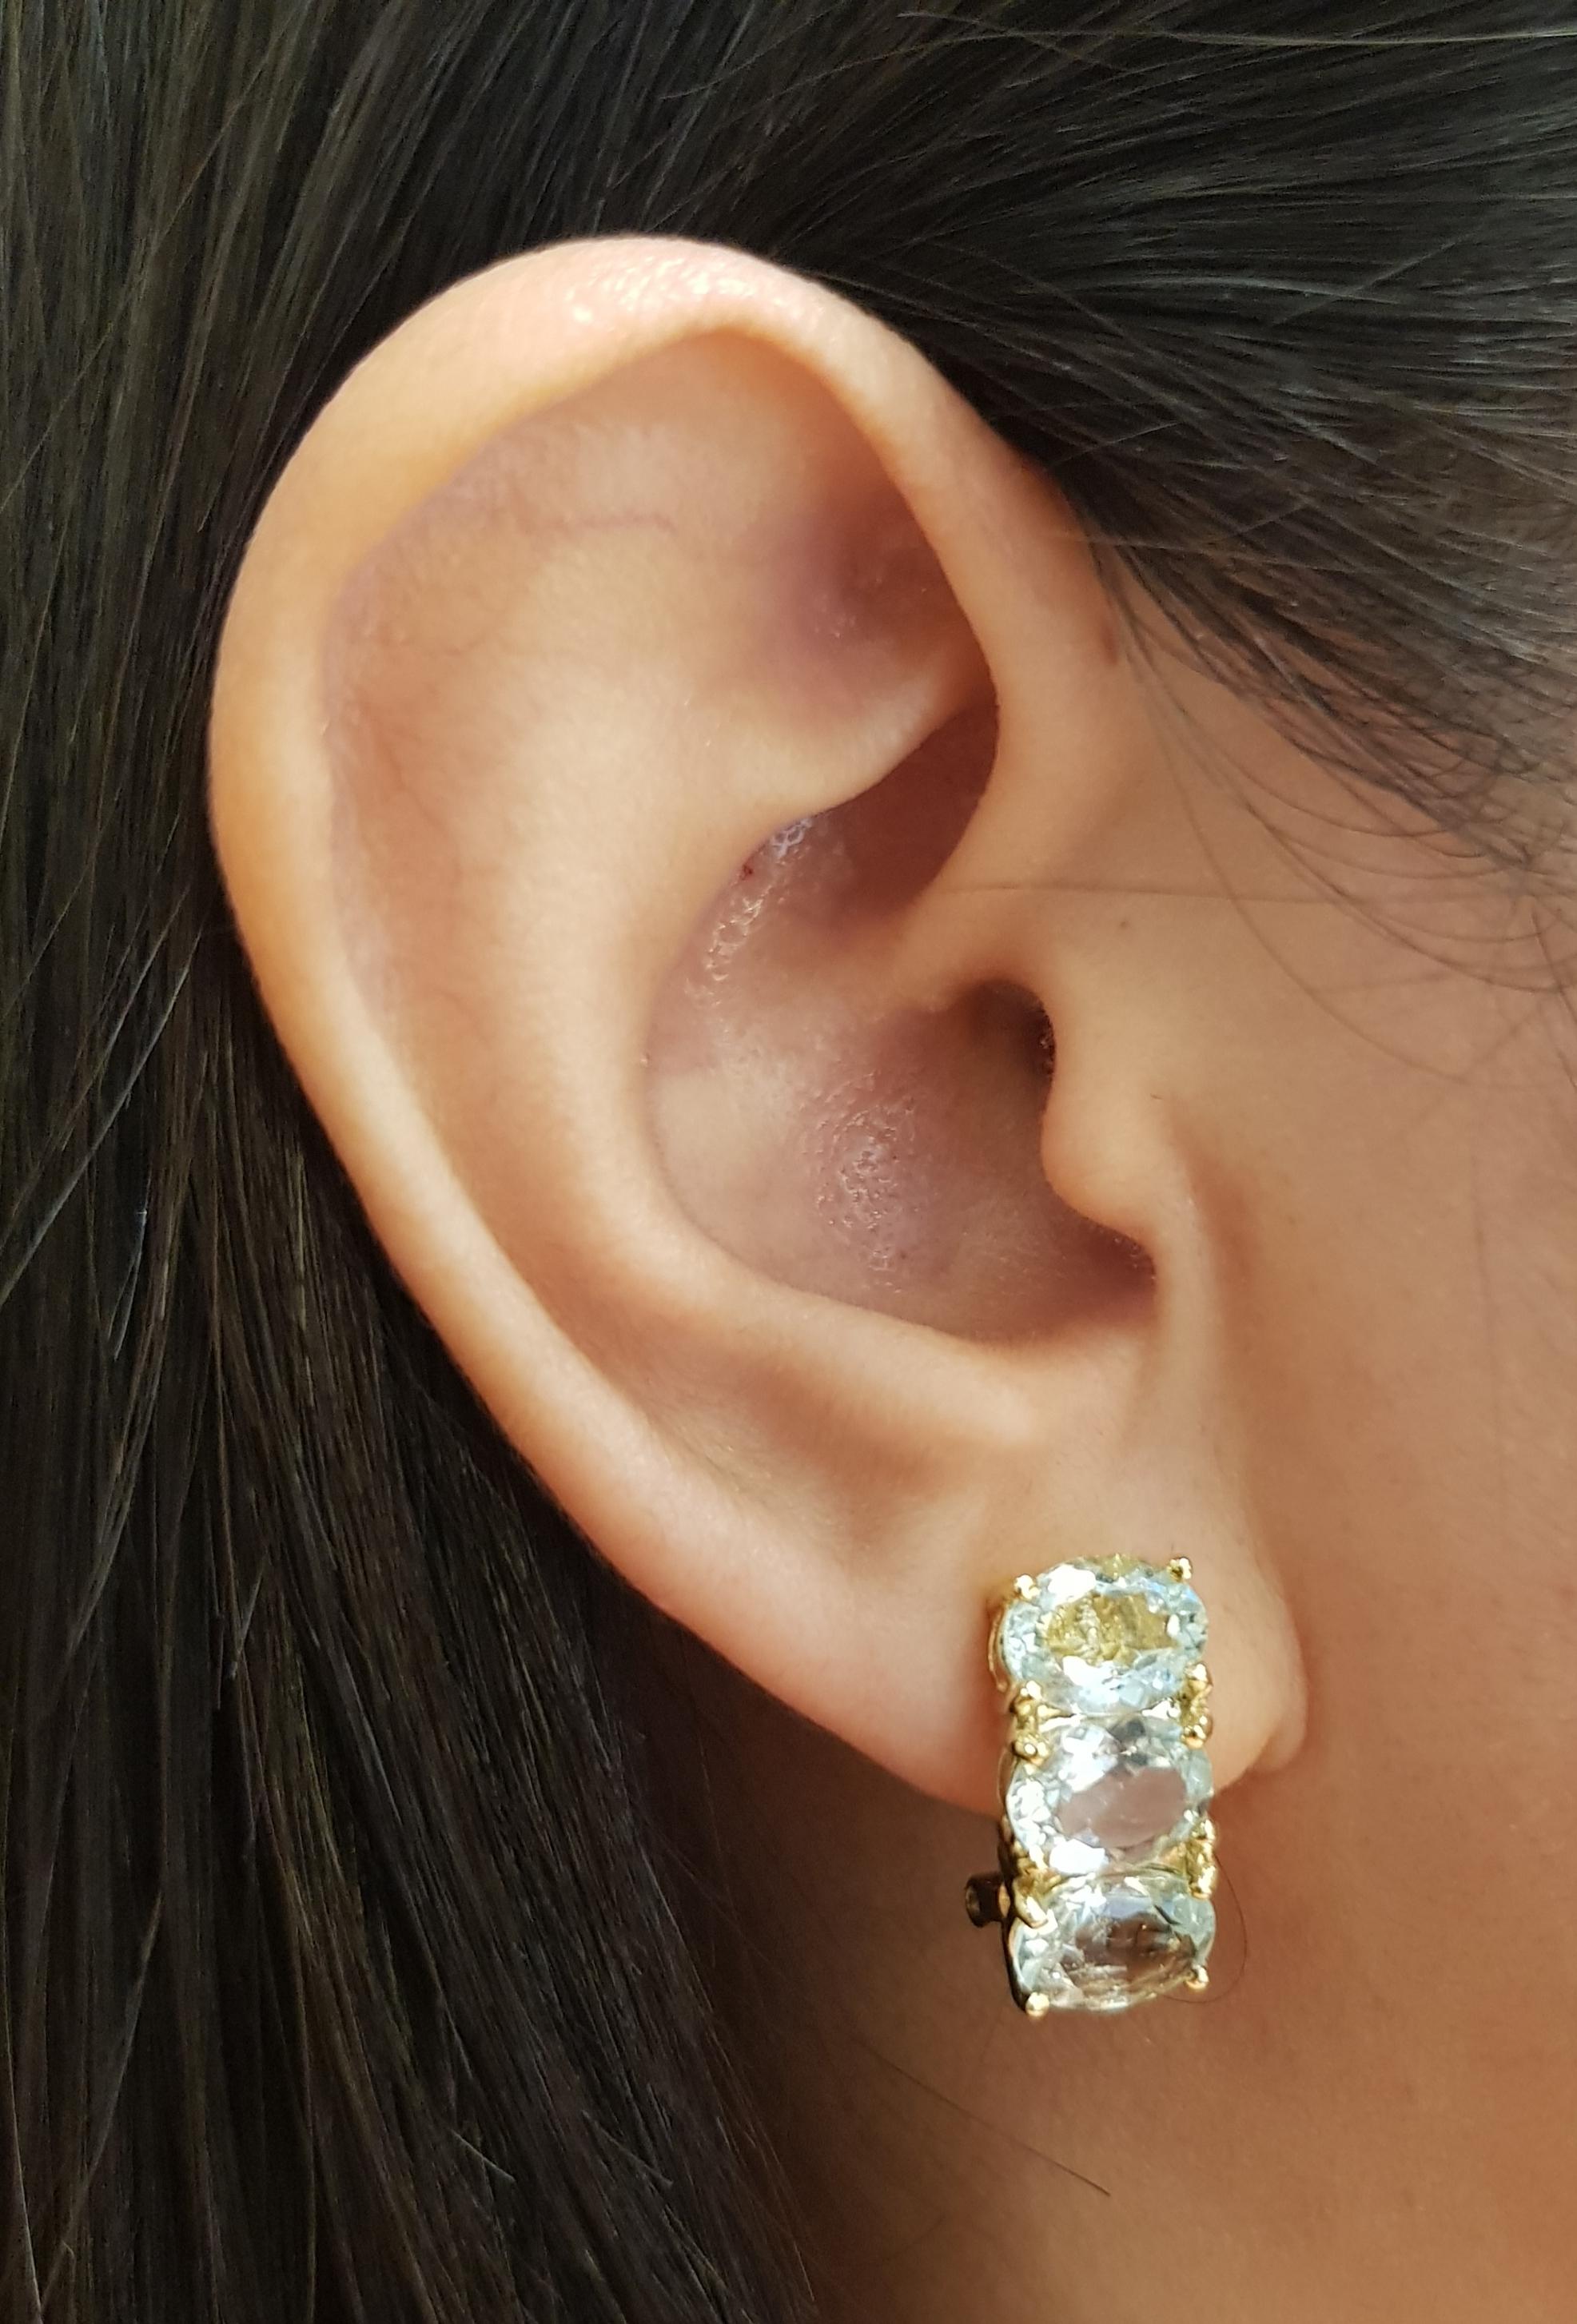 Aquamarine 5.82 carats Earrings set in 14K Gold Settings

Width: 0.8 cm 
Length: 1.9 cm
Total Weight: 9.25 grams

